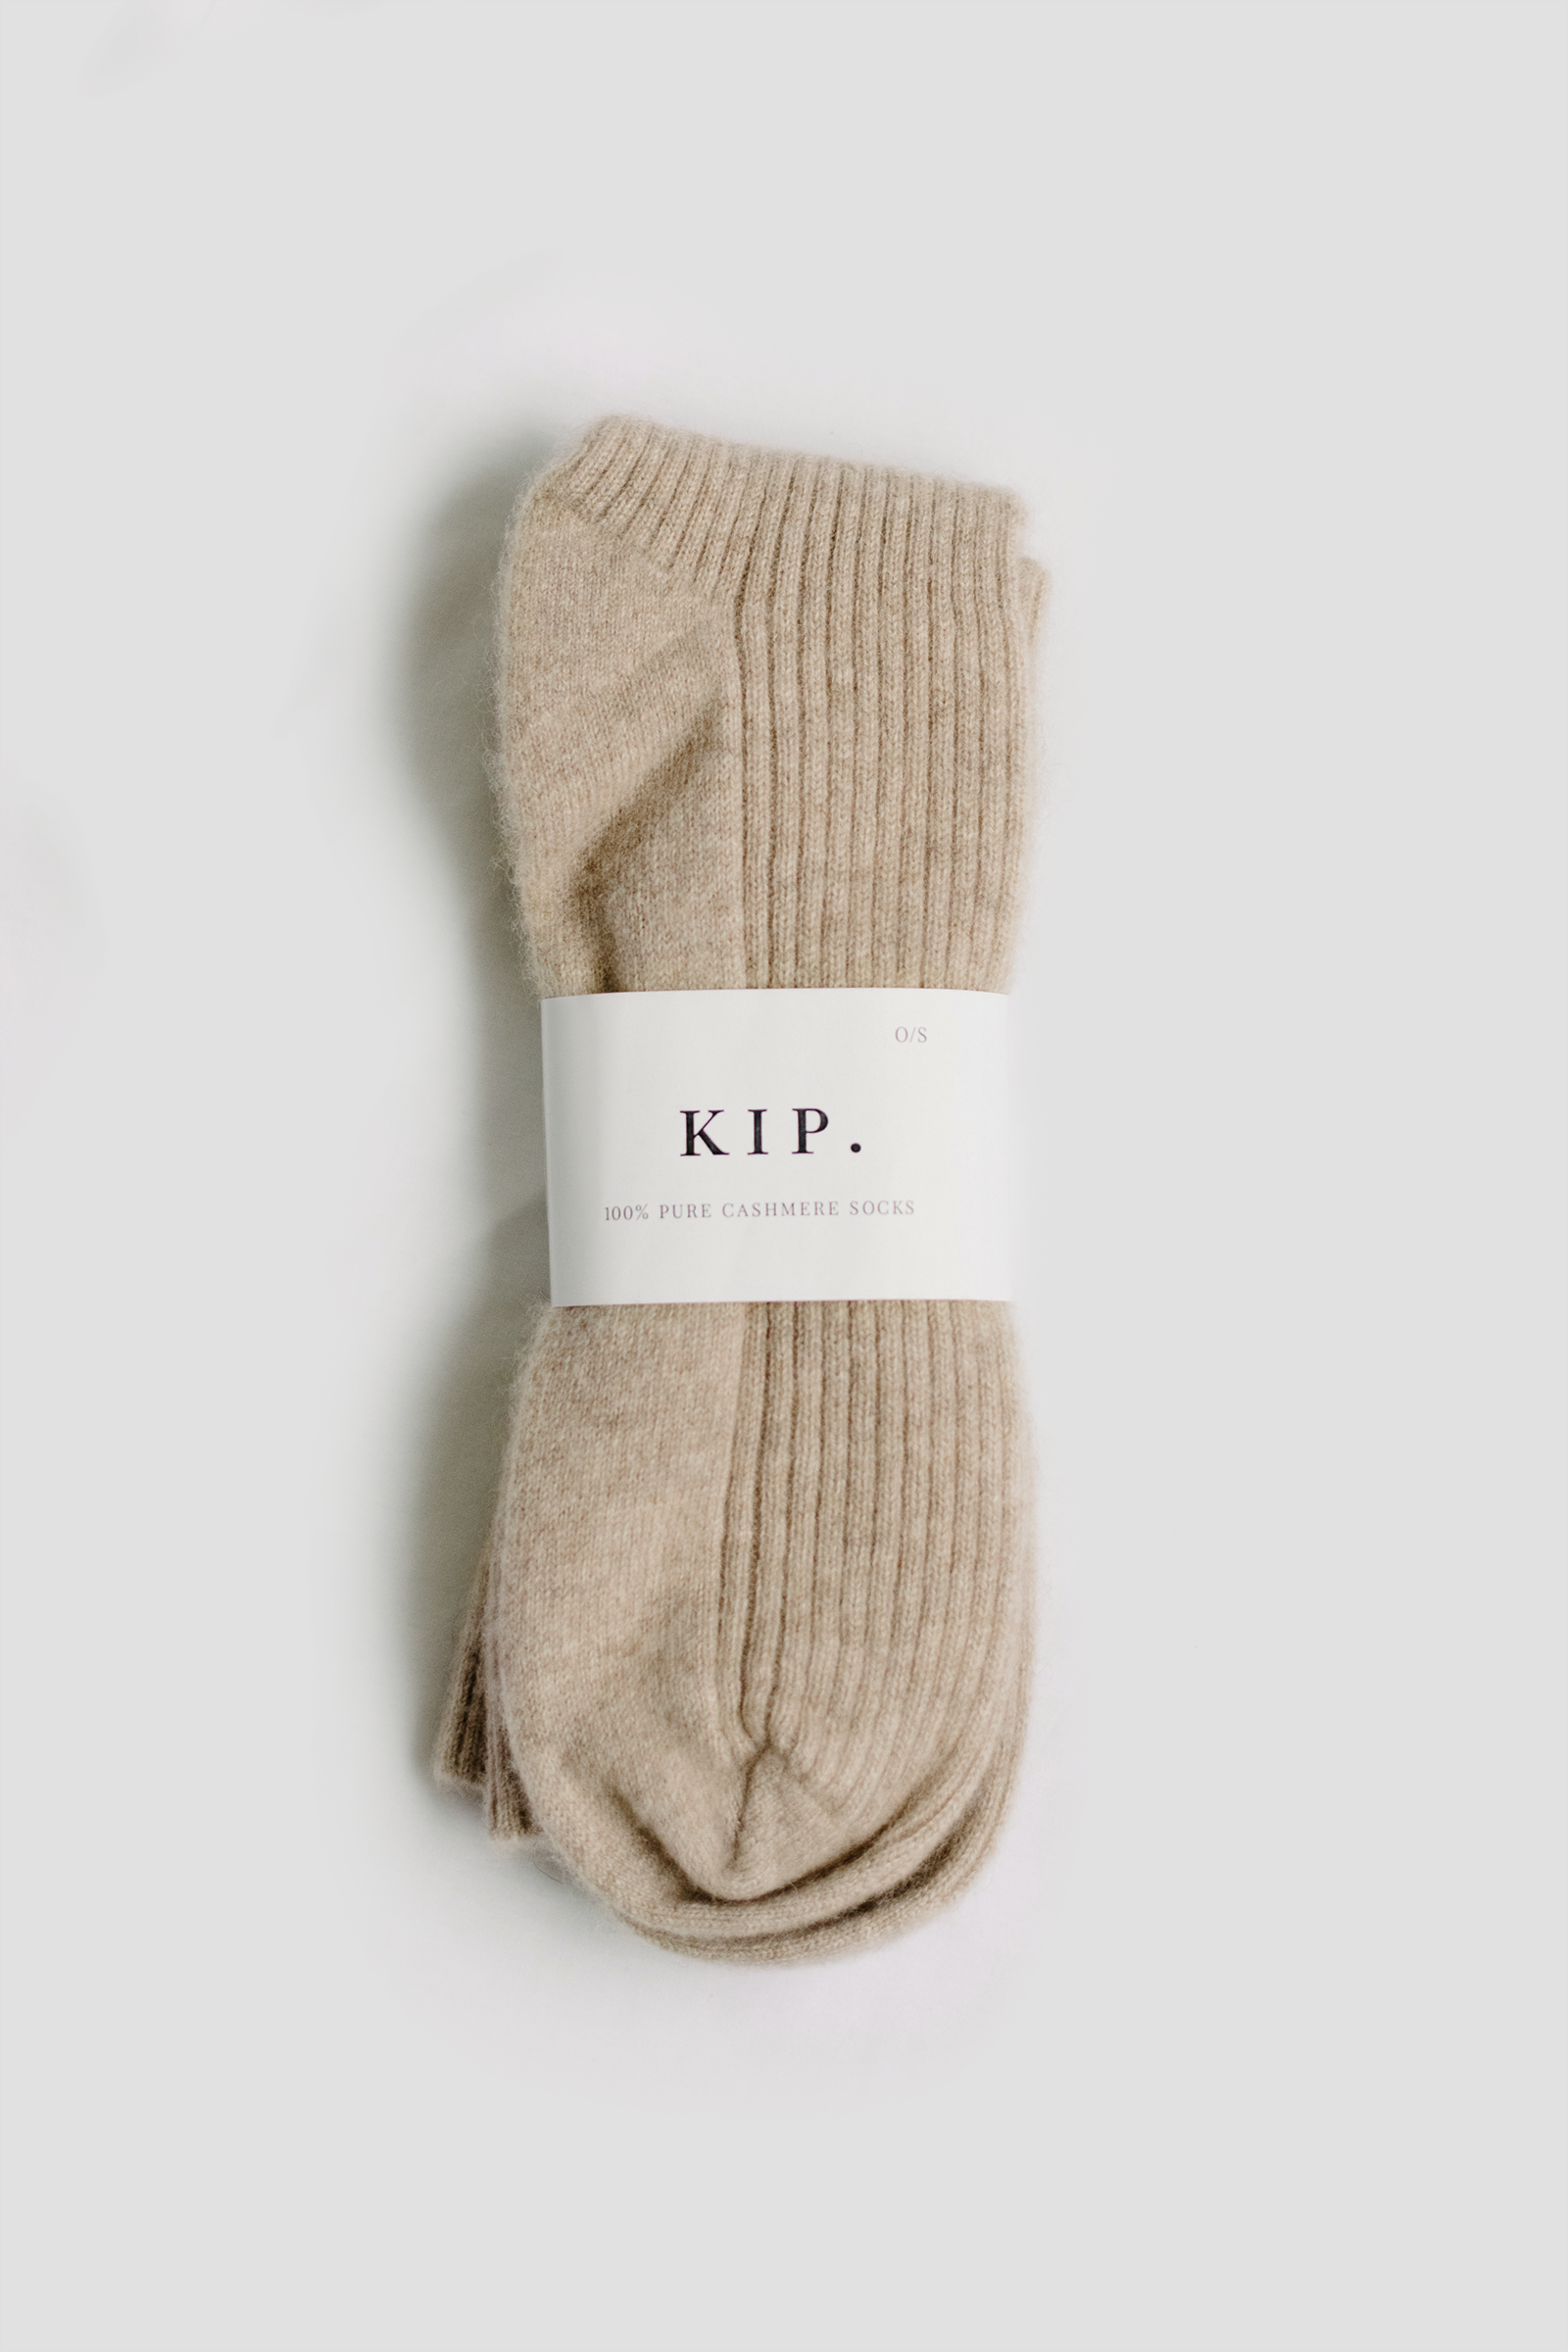 KIP Pure Cashmere Sleep Socks in Champagne